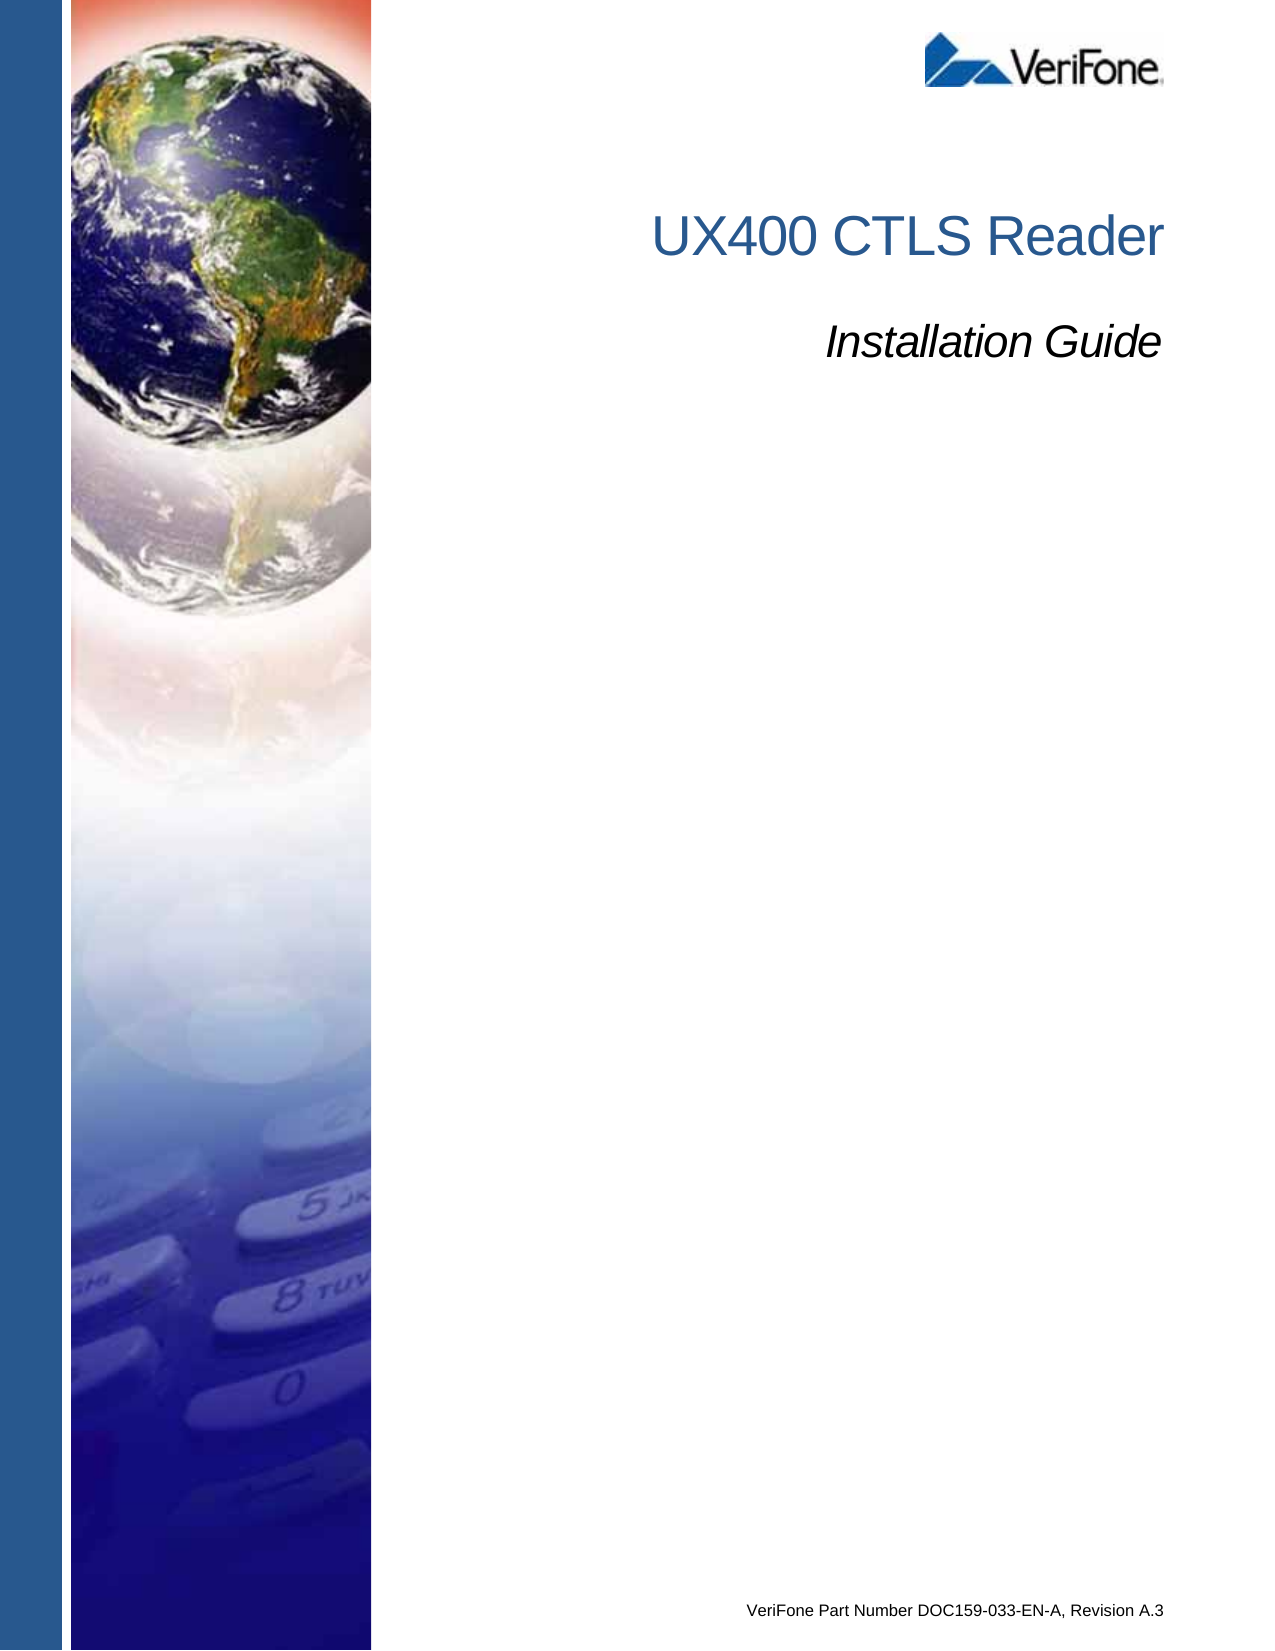 VeriFone Part Number DOC159-033-EN-A, Revision A.3UX400 CTLS ReaderInstallation Guide